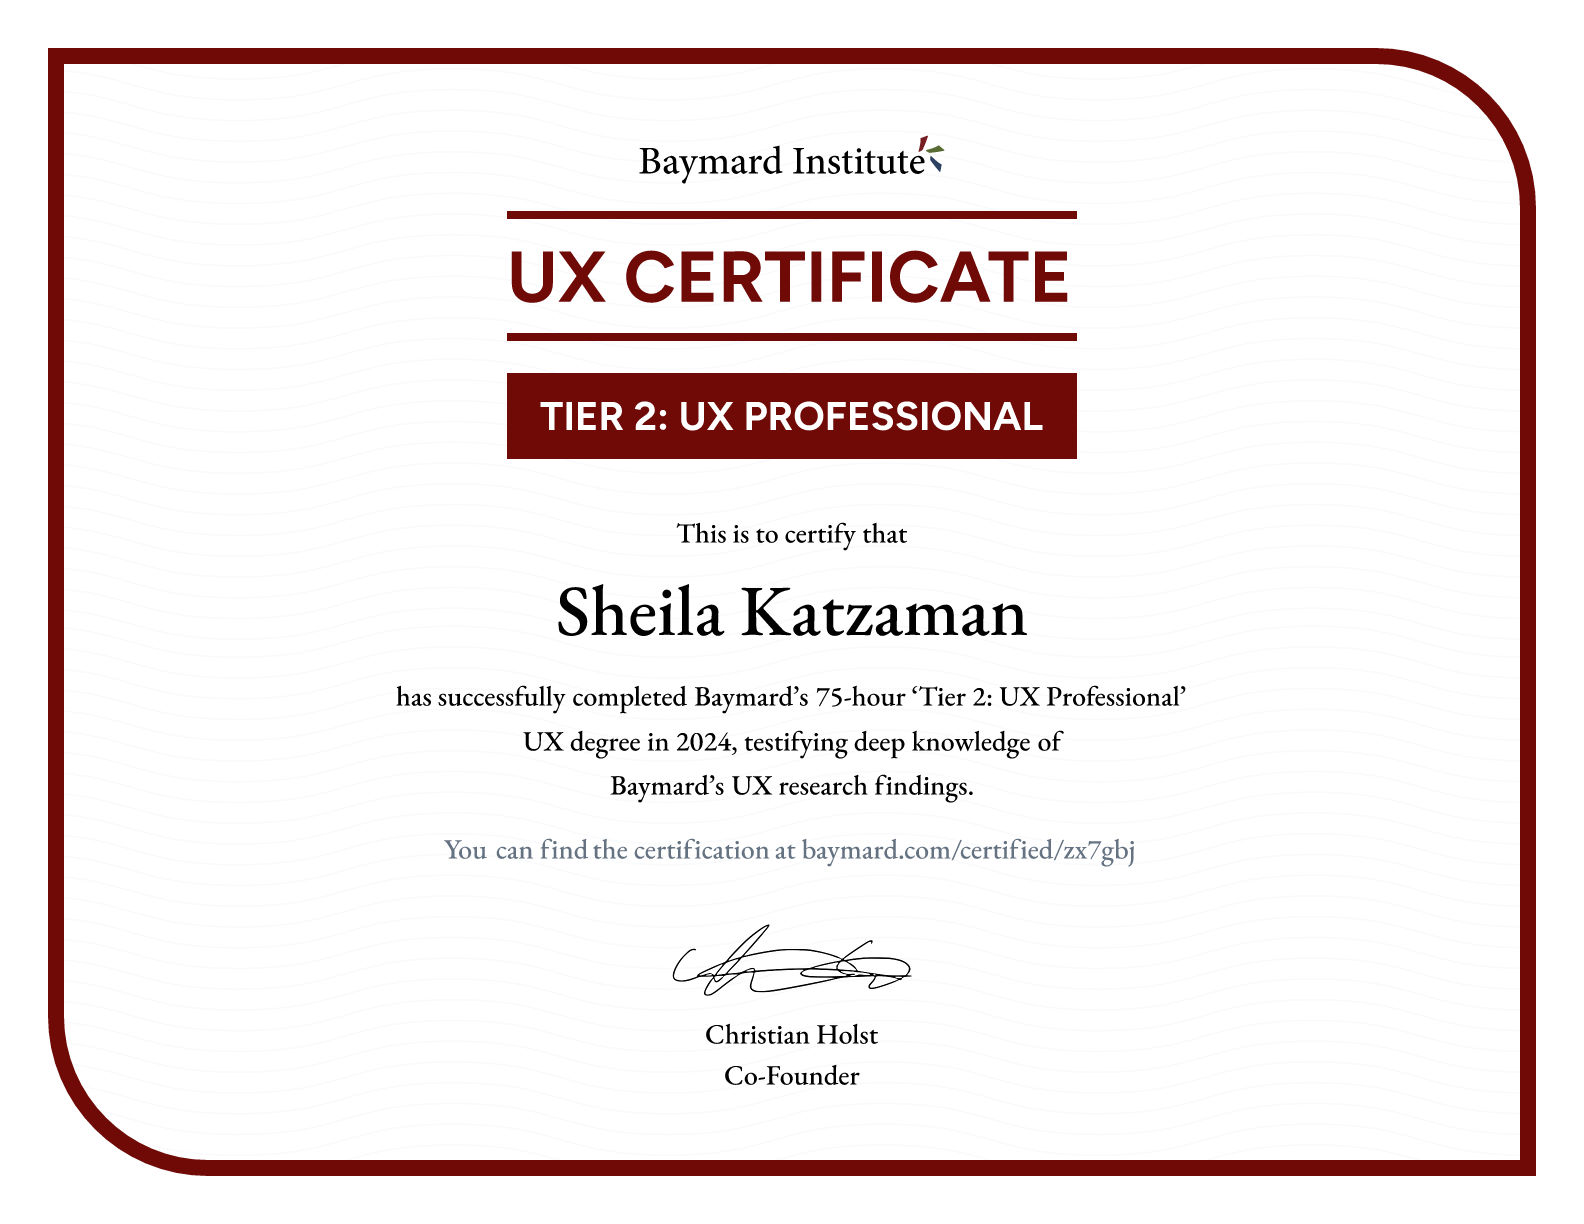 Sheila Katzaman’s certificate